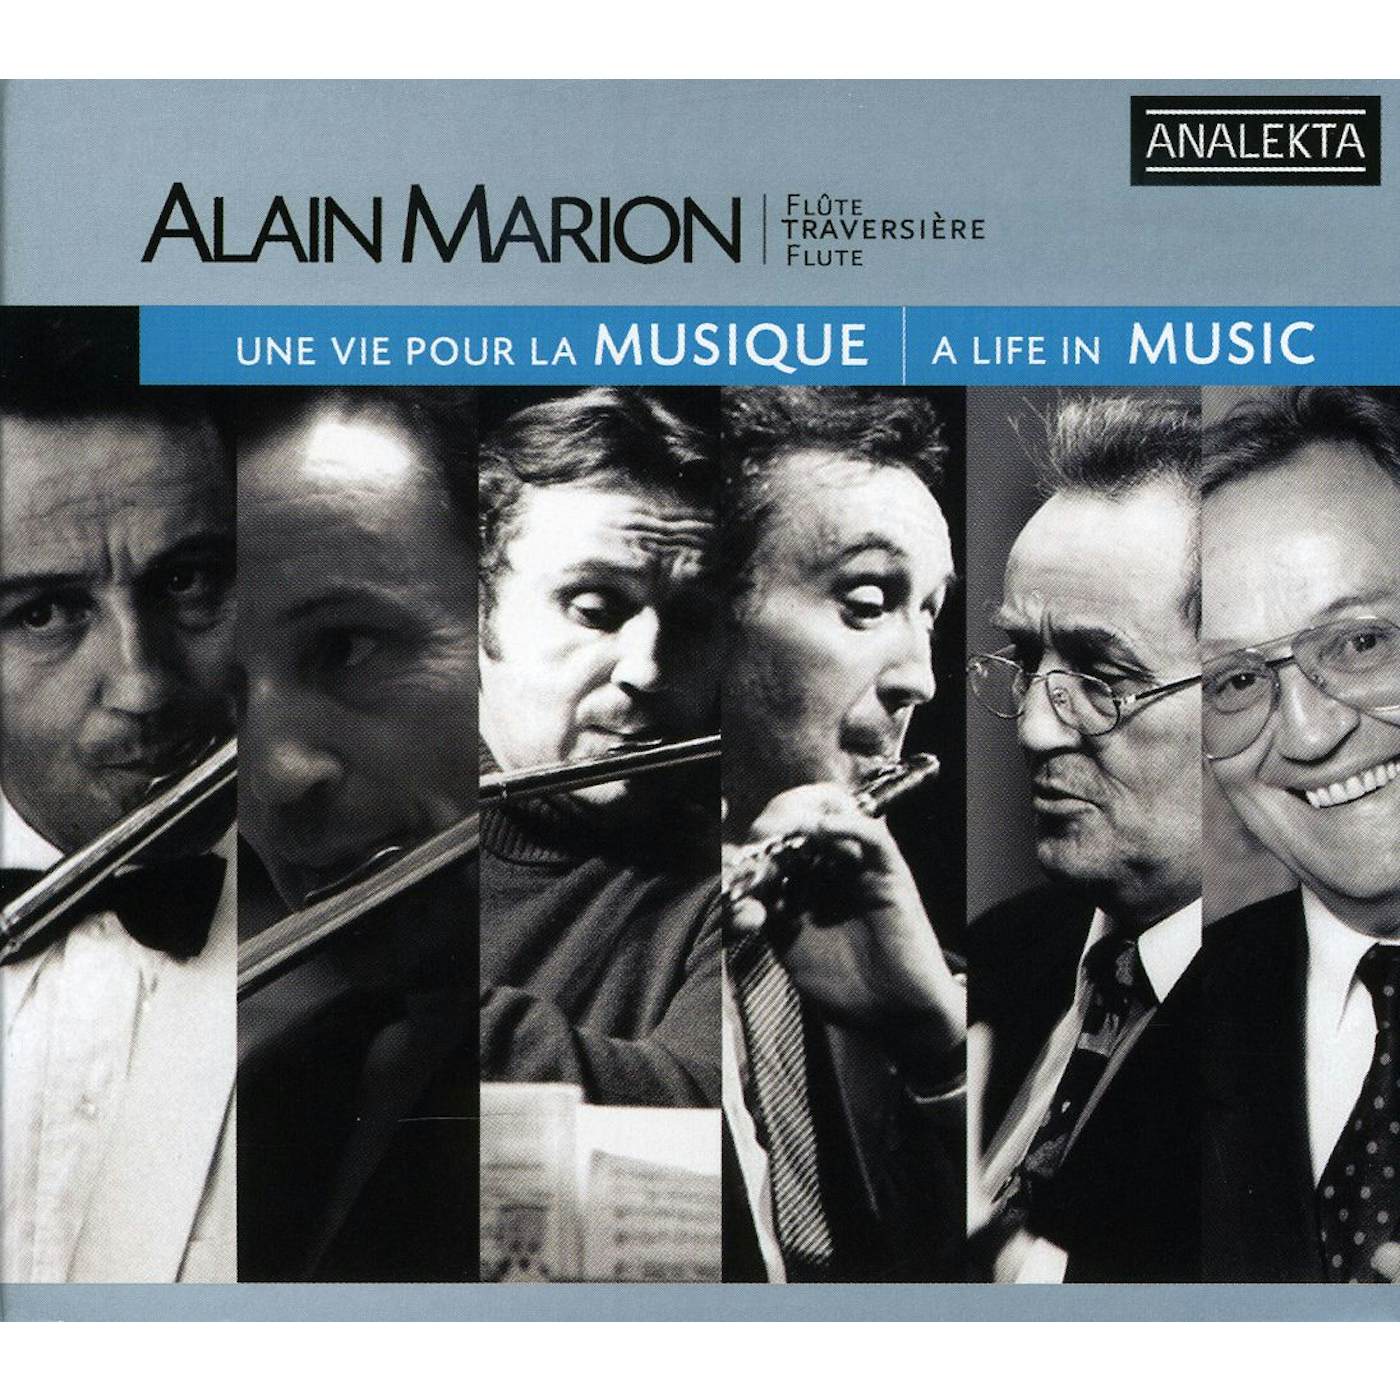 Alain Marion LIFE IN MUSIC CD